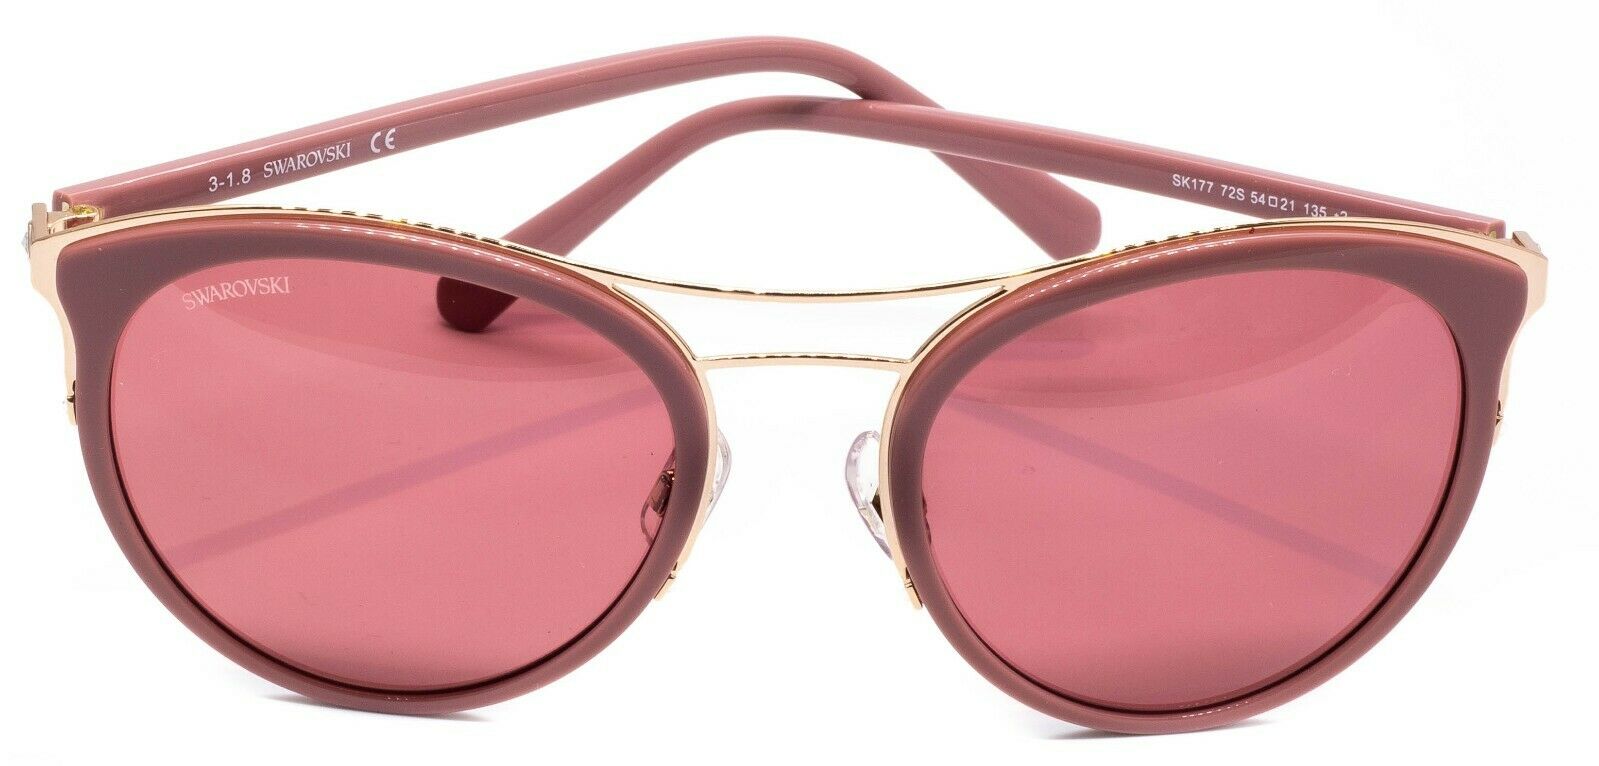 SWAROVSKI SK177 72S *2 54mm Sunglasses Shades Ladies Eyewear Frames BNIB - New